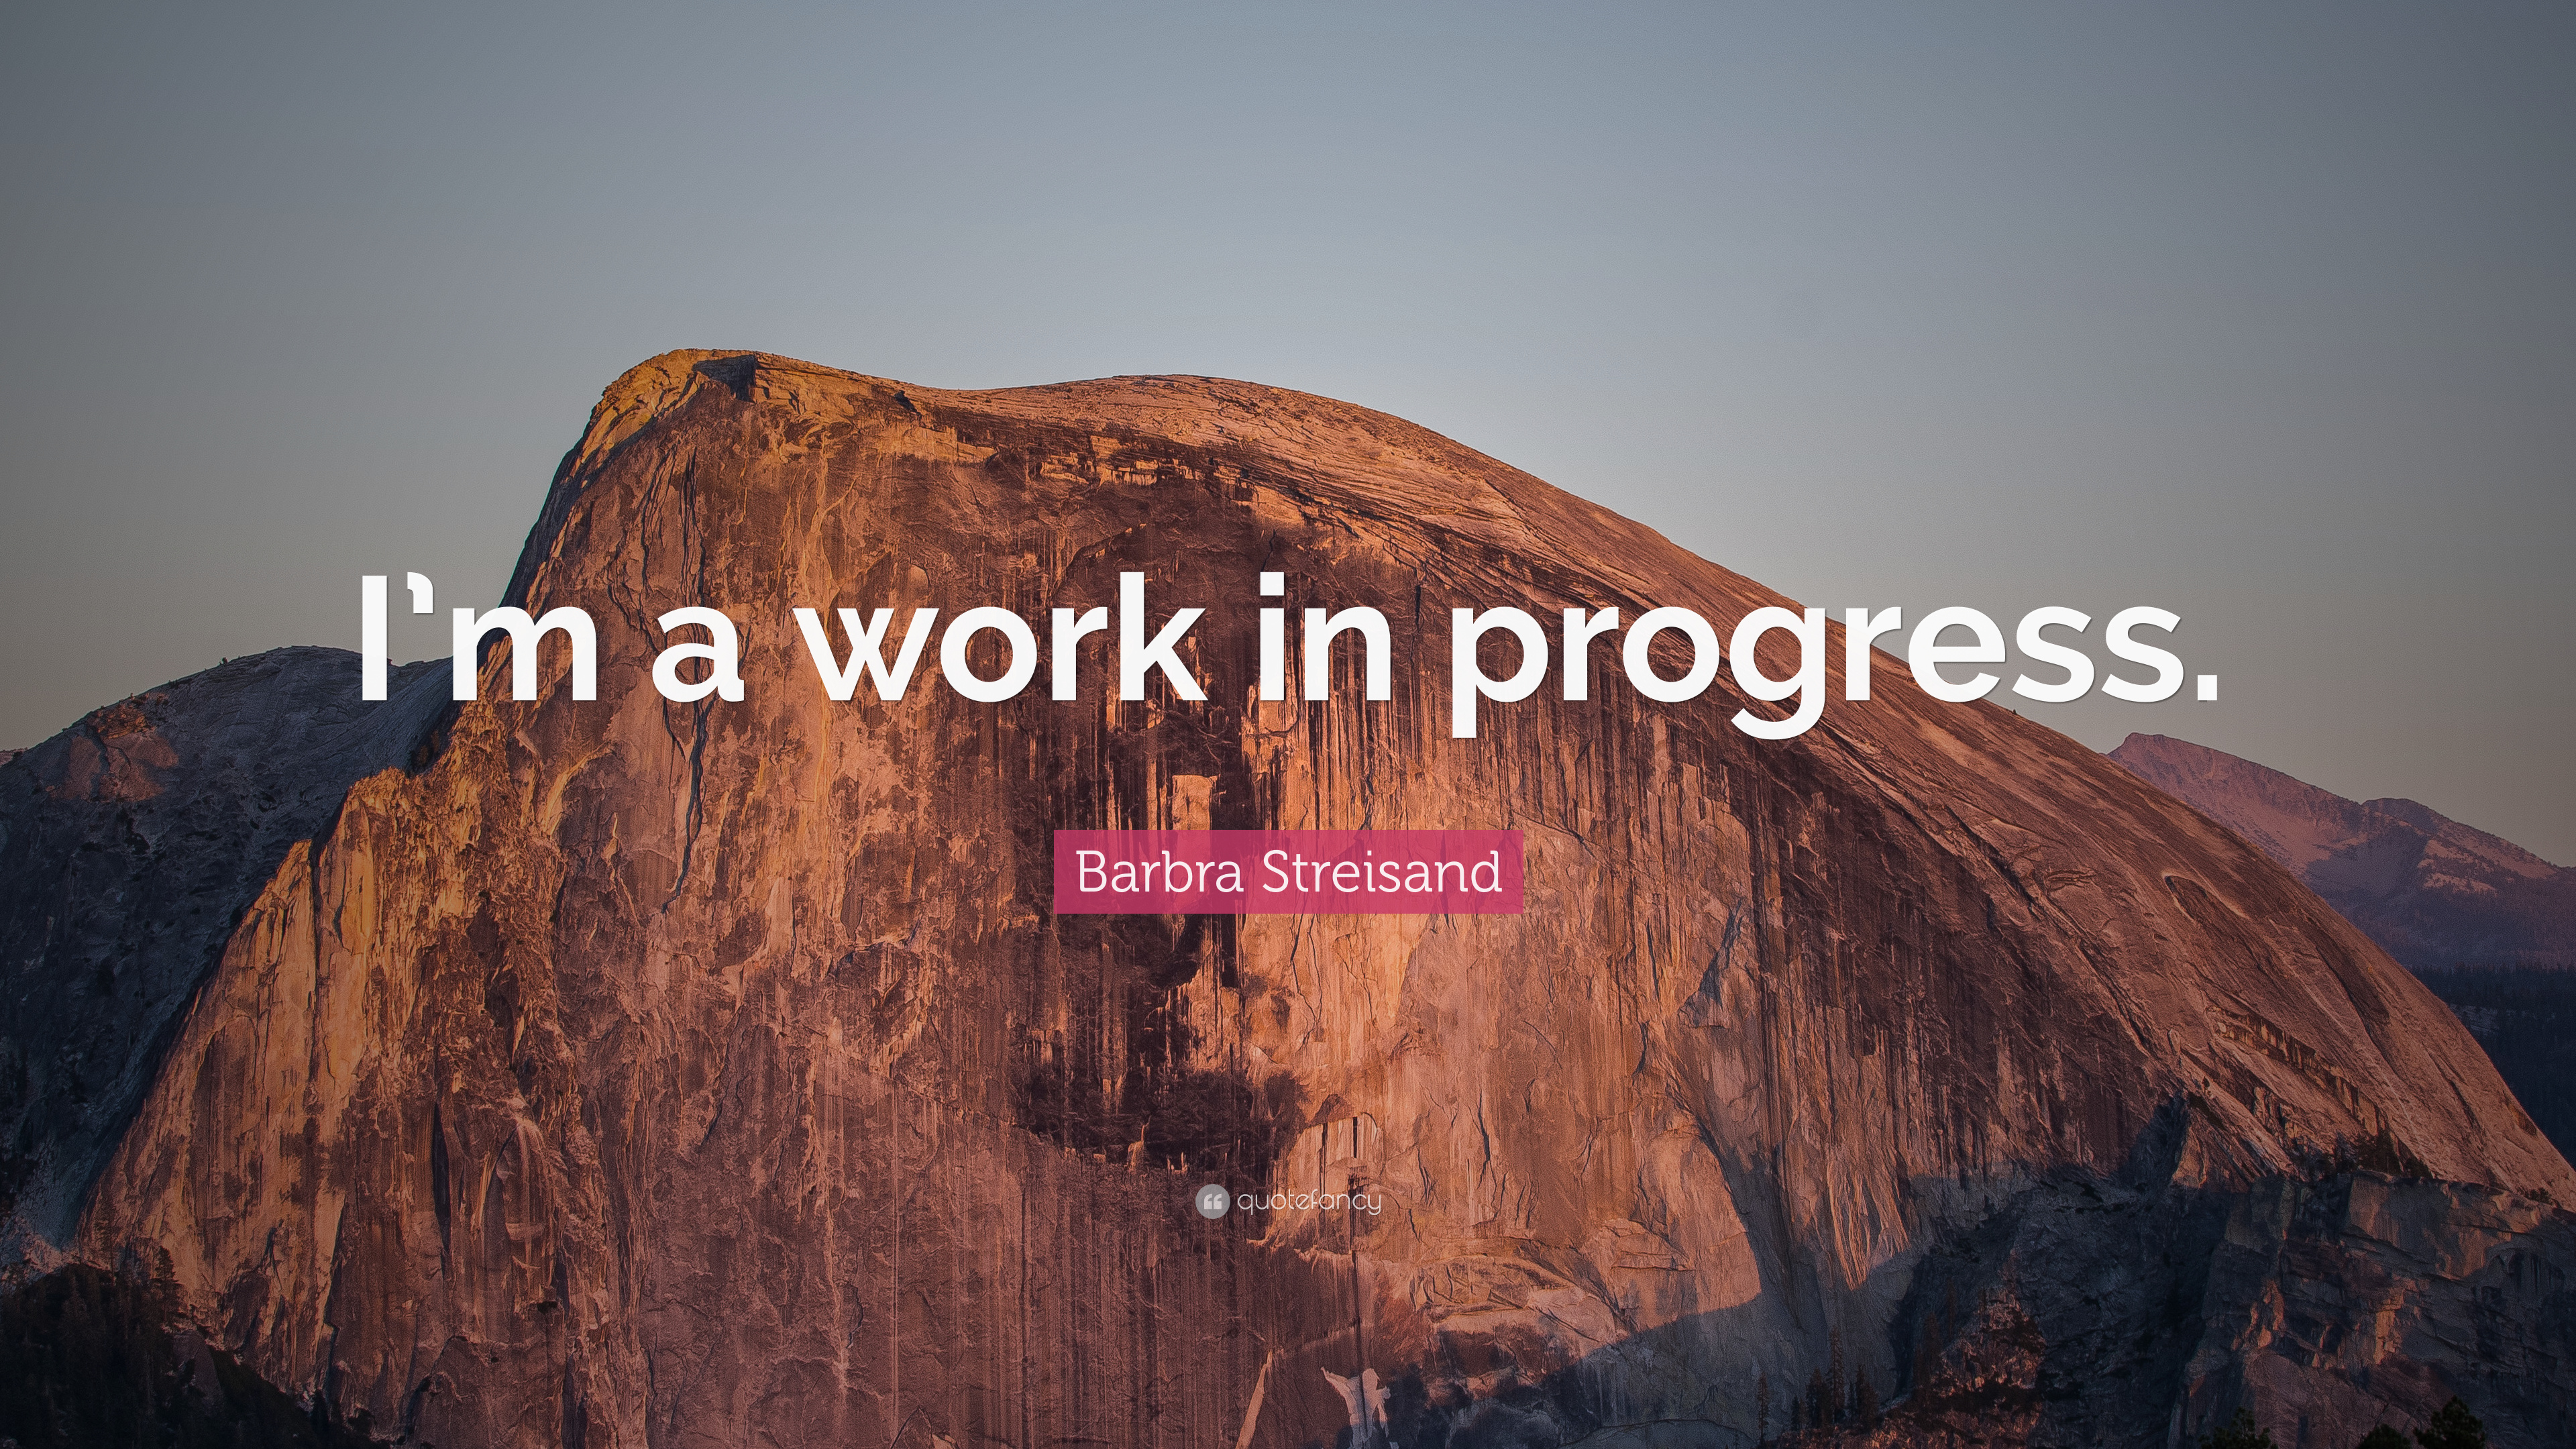 Barbra Streisand Quote: “I'm a work in progress.”